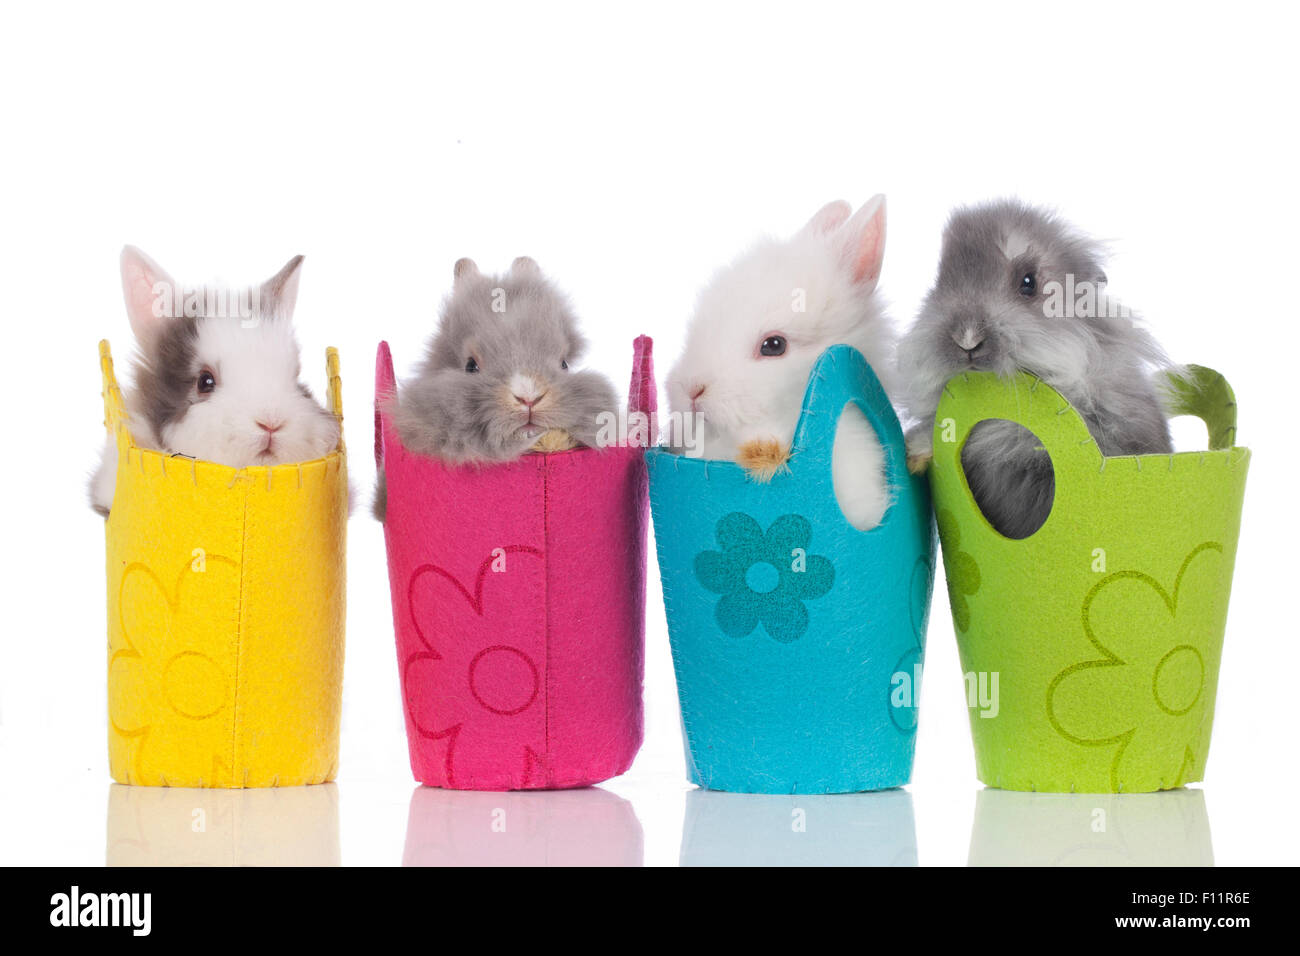 Dwarf Rabbit, Lionhead Rabbit Four individuals multicoloured bags Studio picture against white background Stock Photo